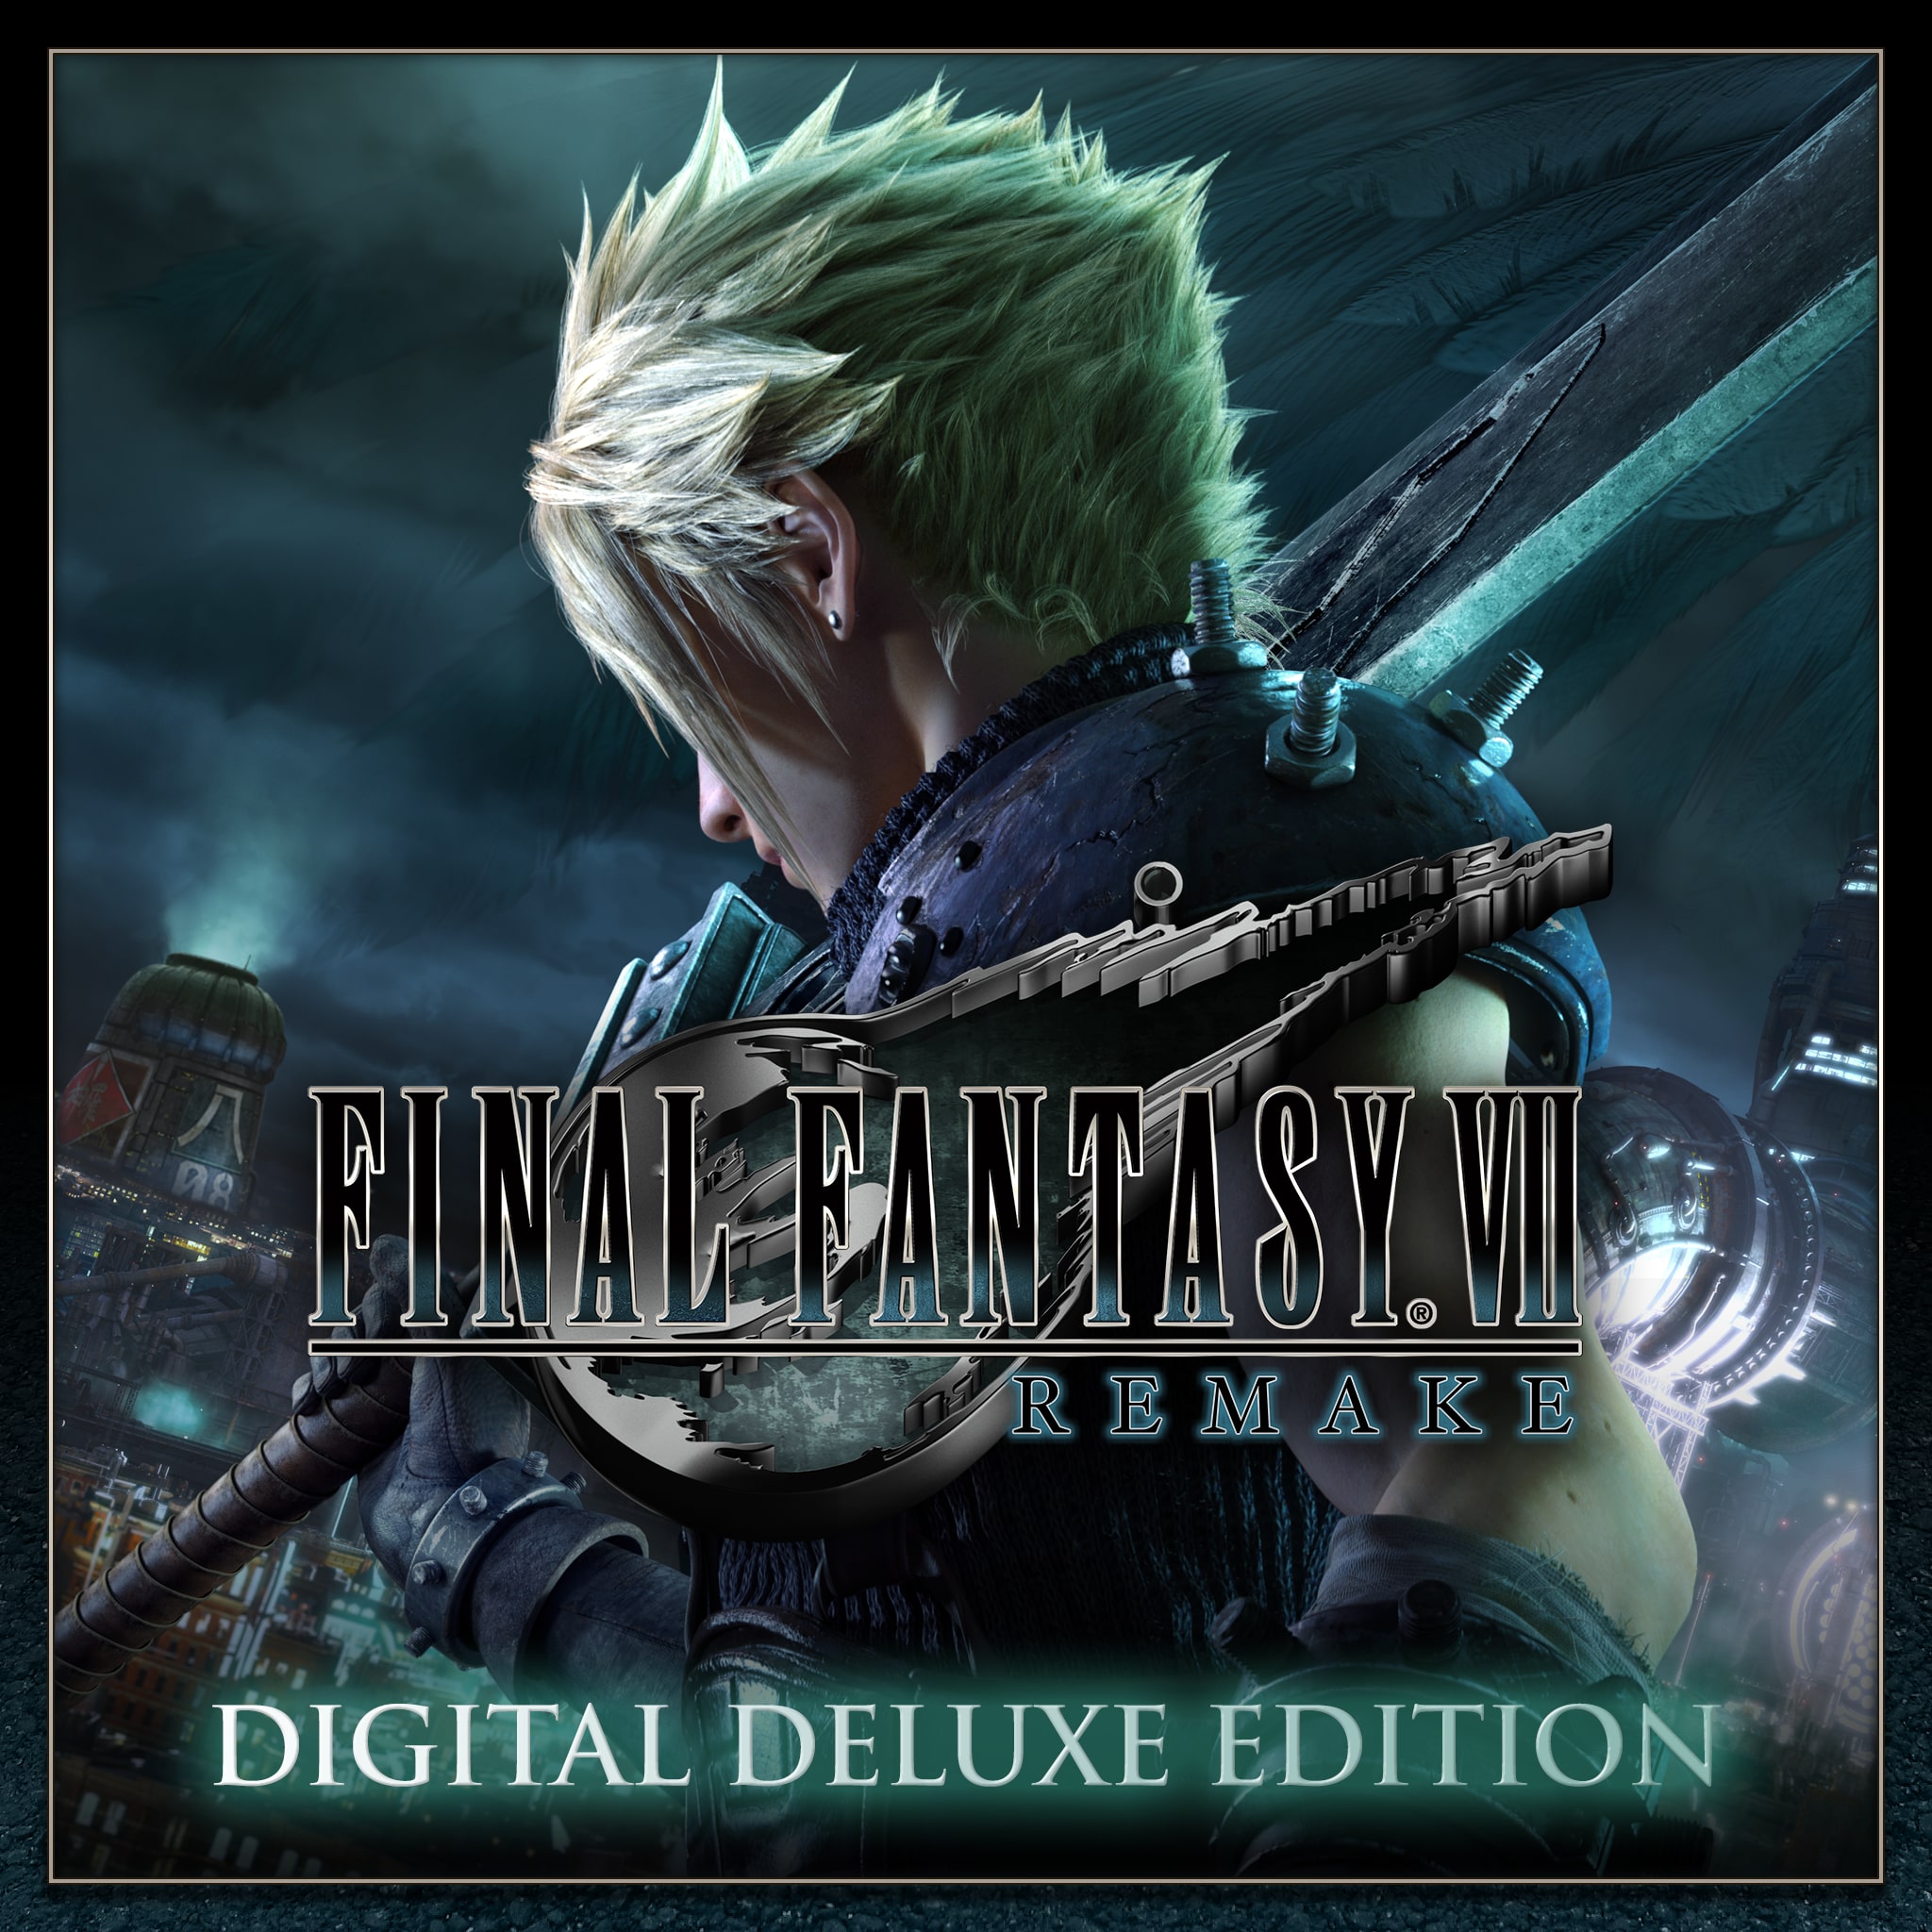 FINAL FANTASY VII REMAKE Digital Deluxe Edition cover